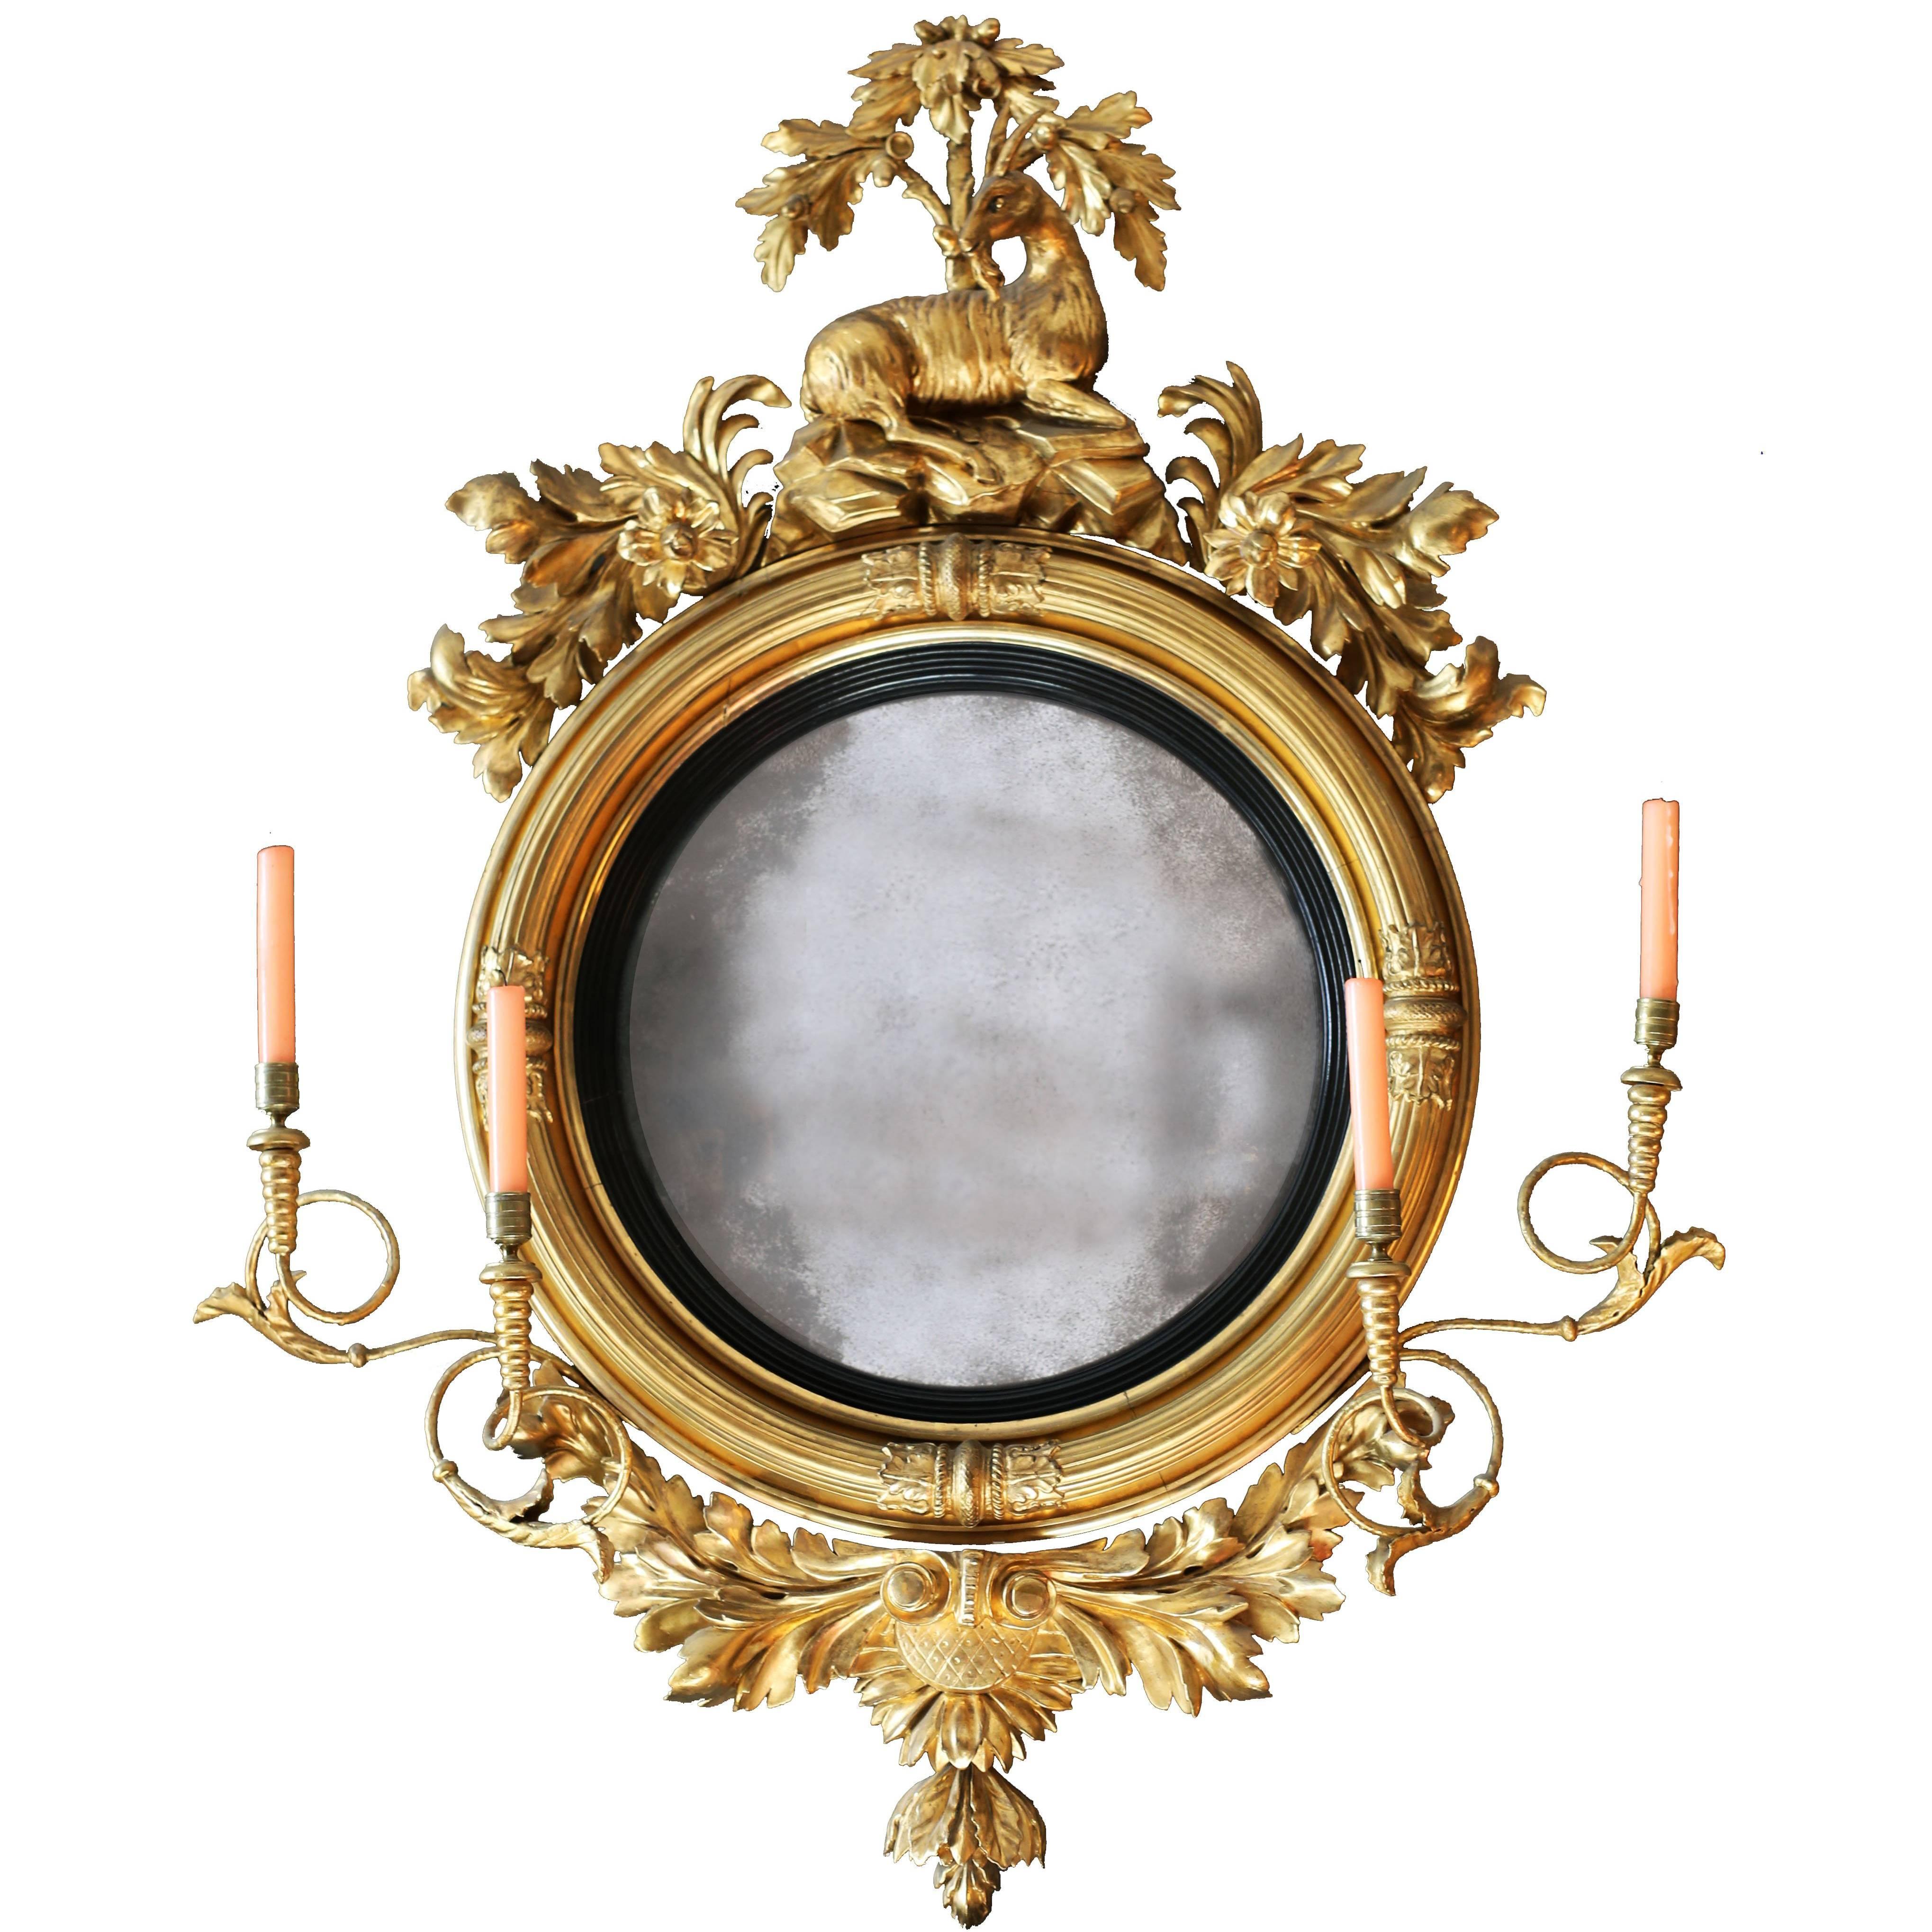 Large Early 19th Century American Regency Girandole Looking Glass